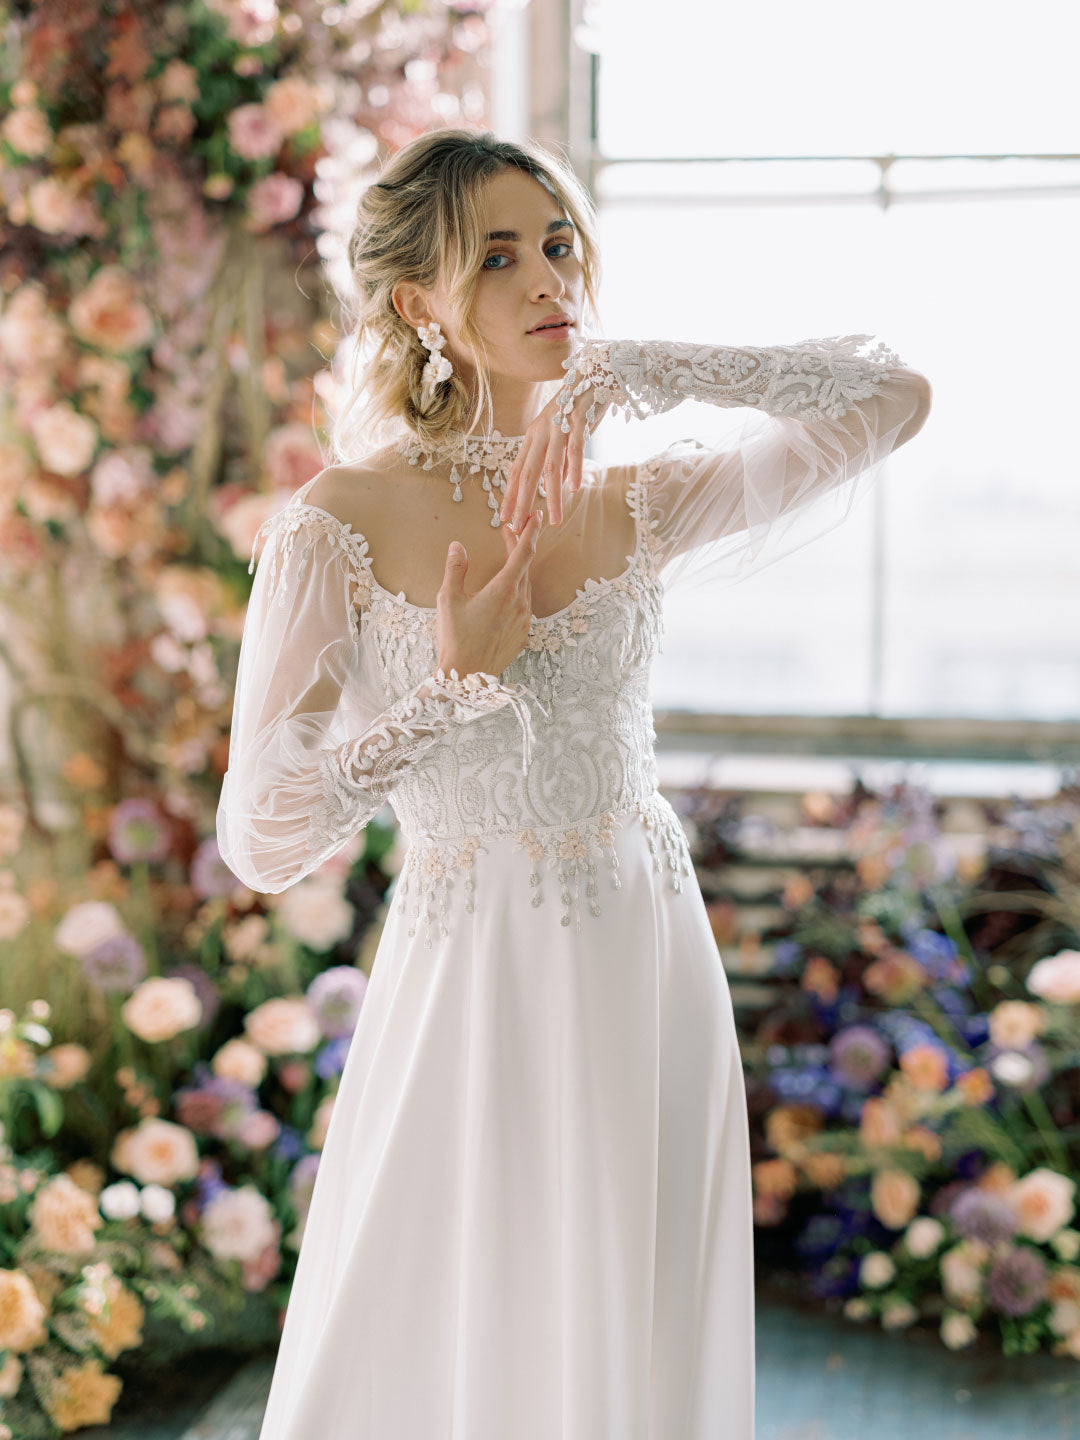 Riviere wedding dress by Claire Pettibone